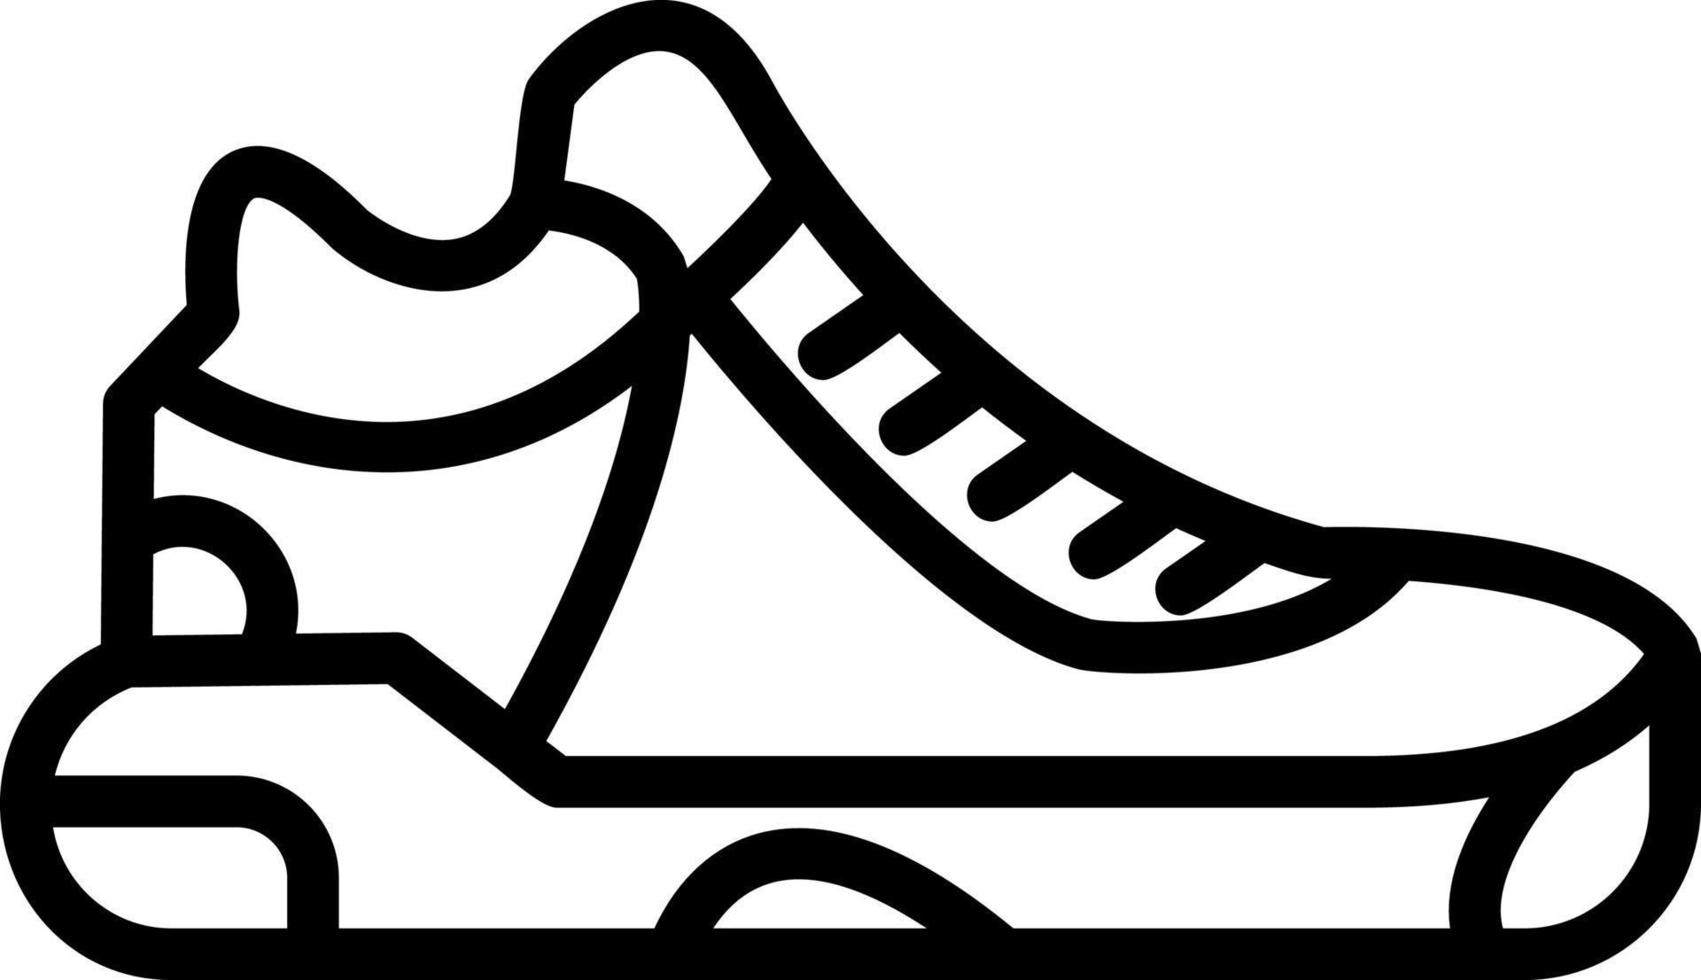 Shoe Vector Icon Design